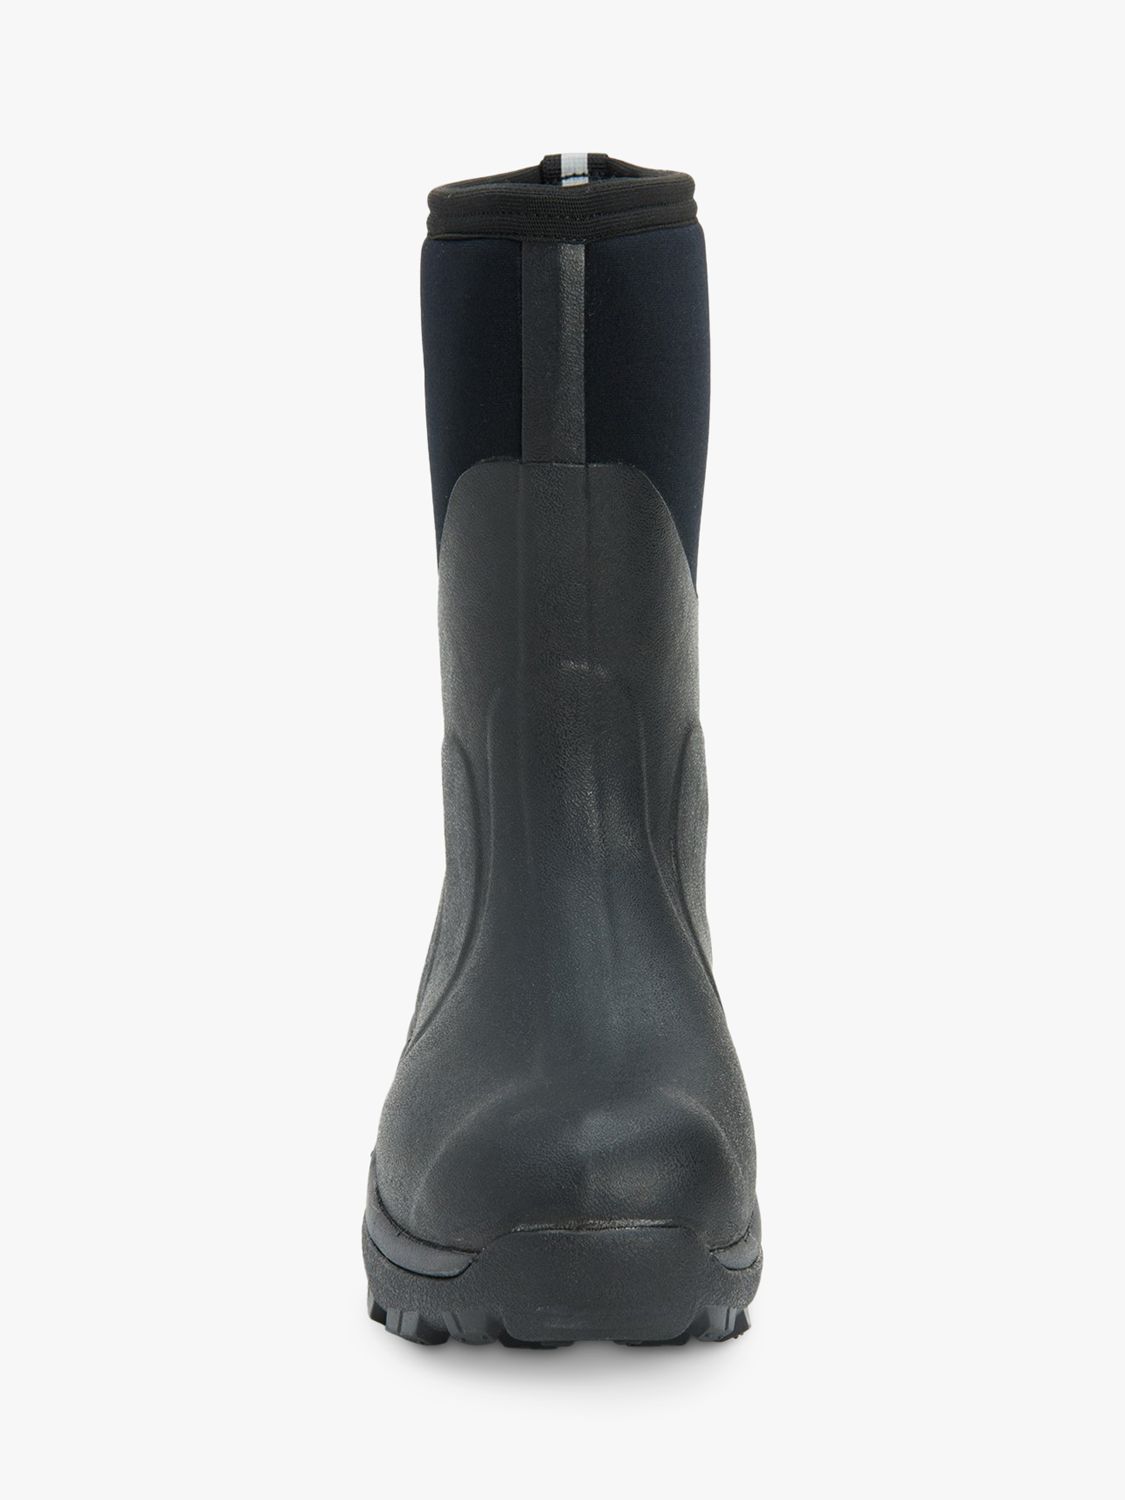 Muck Arctic Sport Pull On Short Wellington Boots, Black, 4